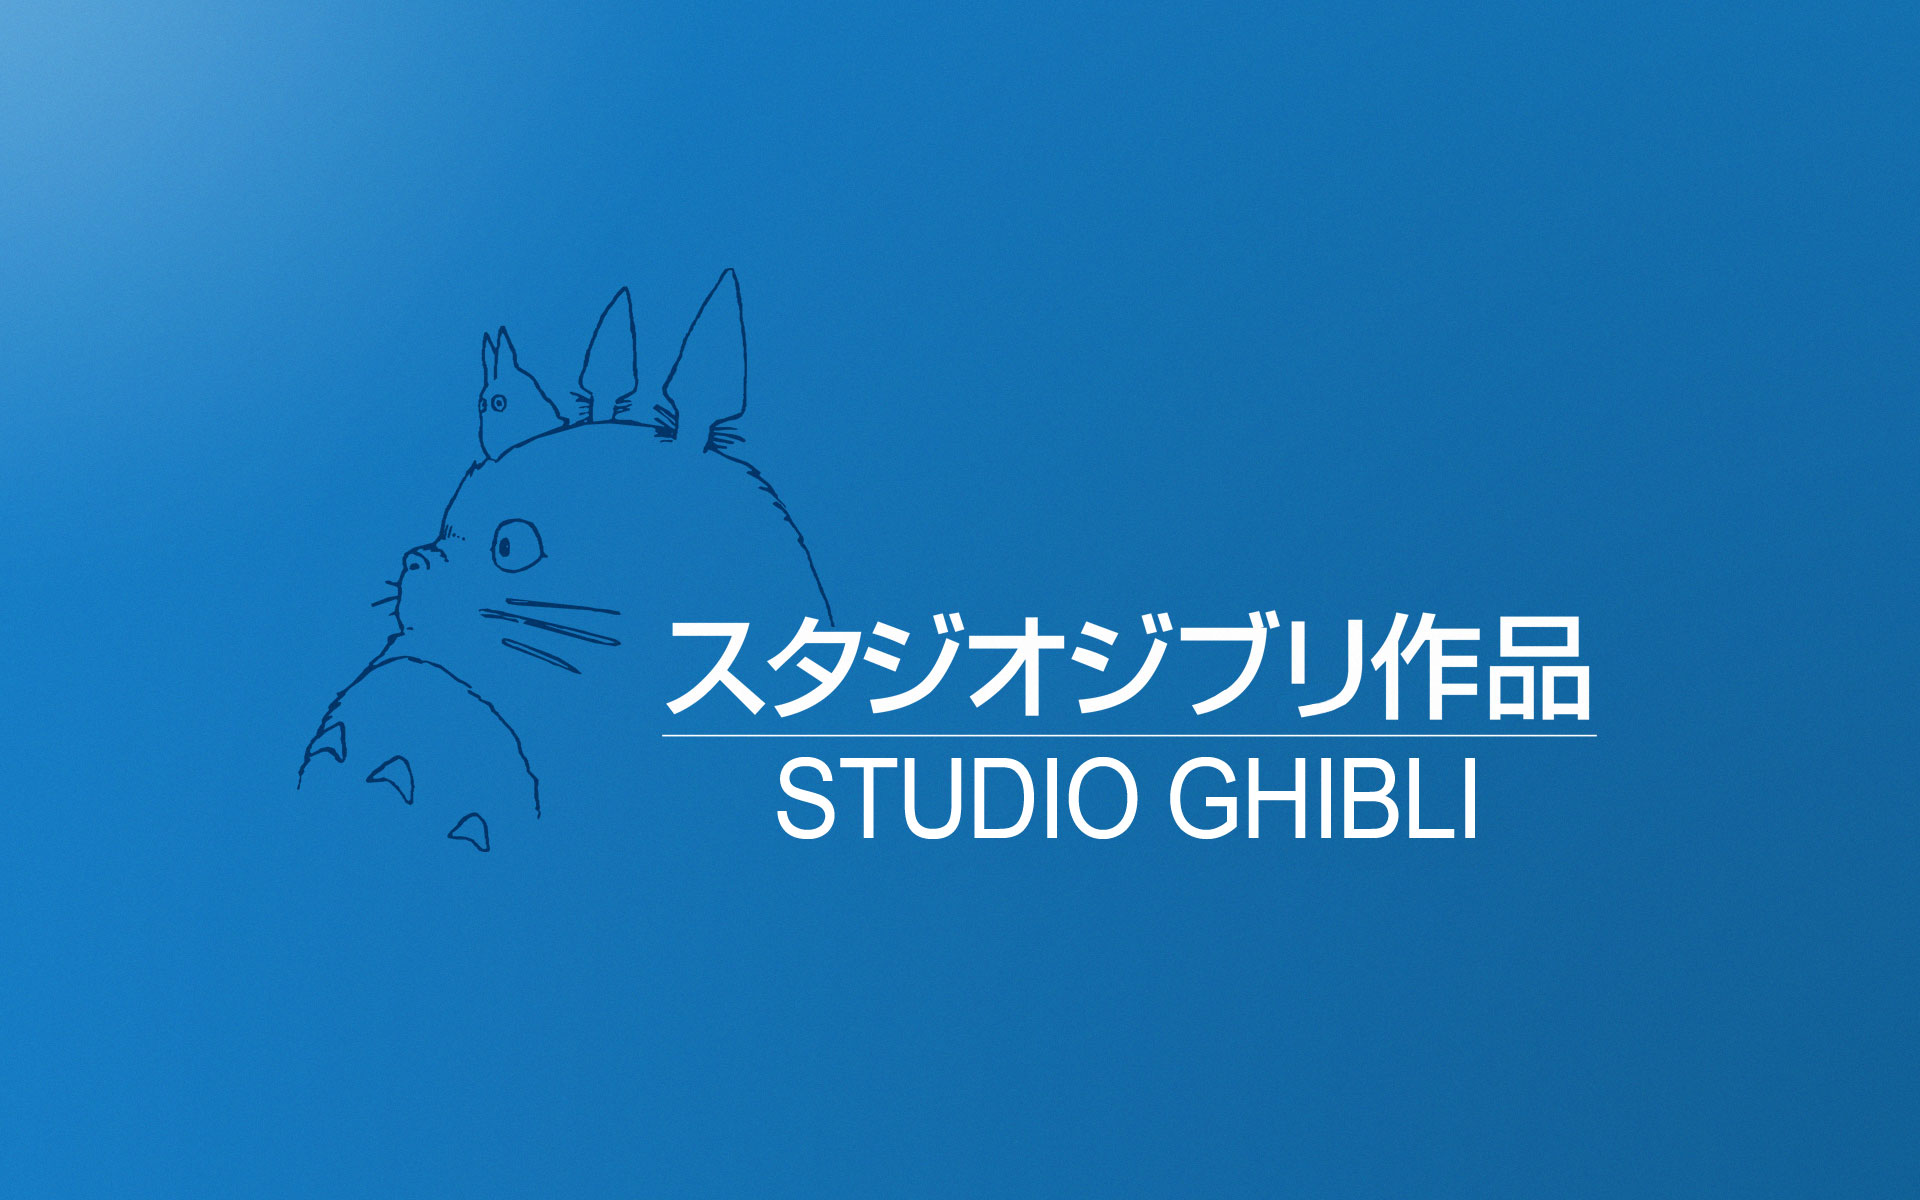 Studio Ghibli - обои на рабочий стол